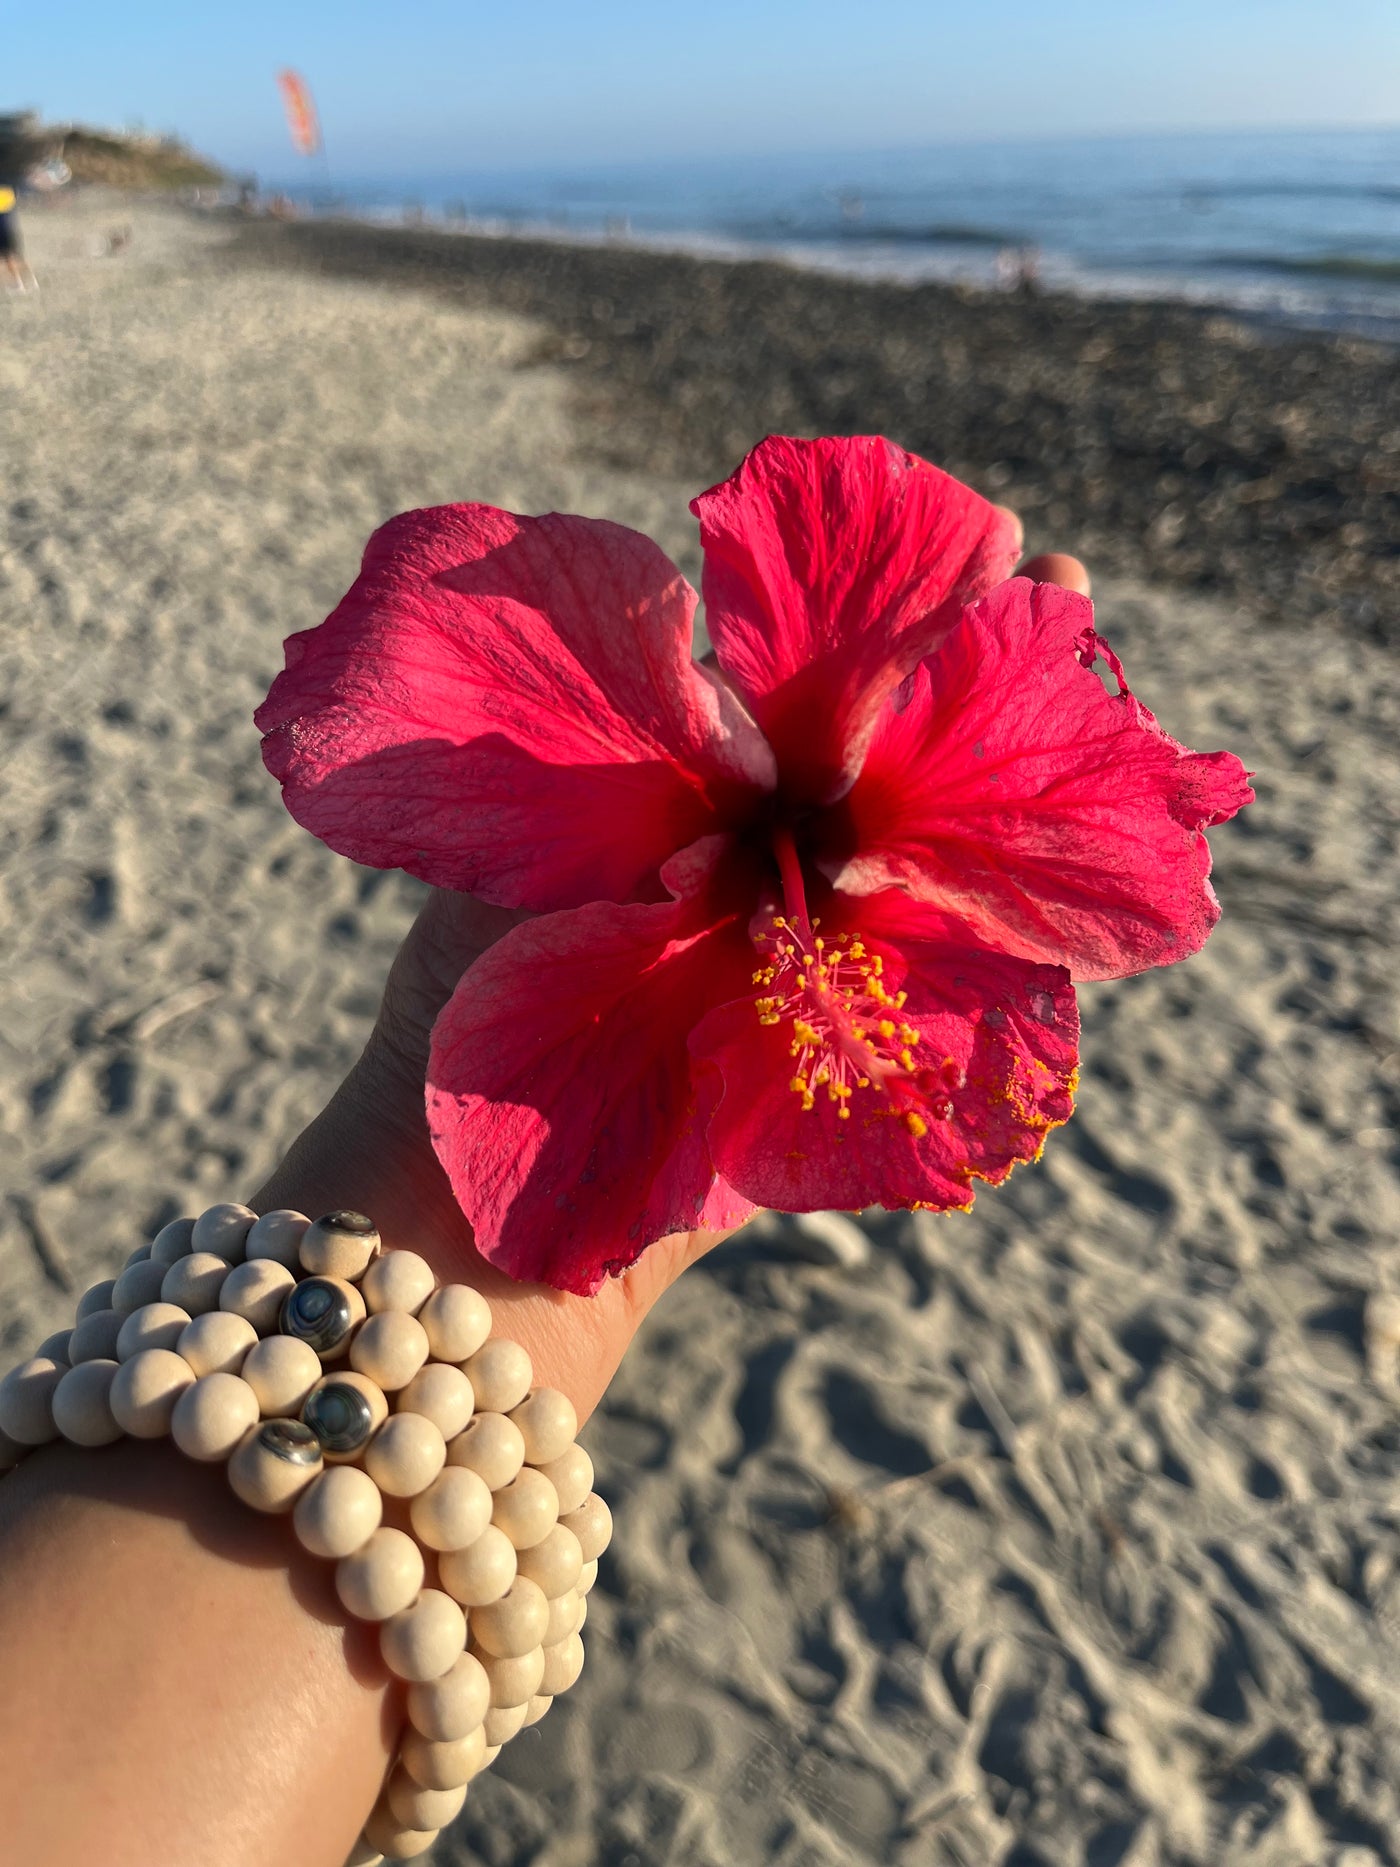 PĀUA MALA For Maui - Abalone Shell and Whitewood Unisex Stretch Bracelet